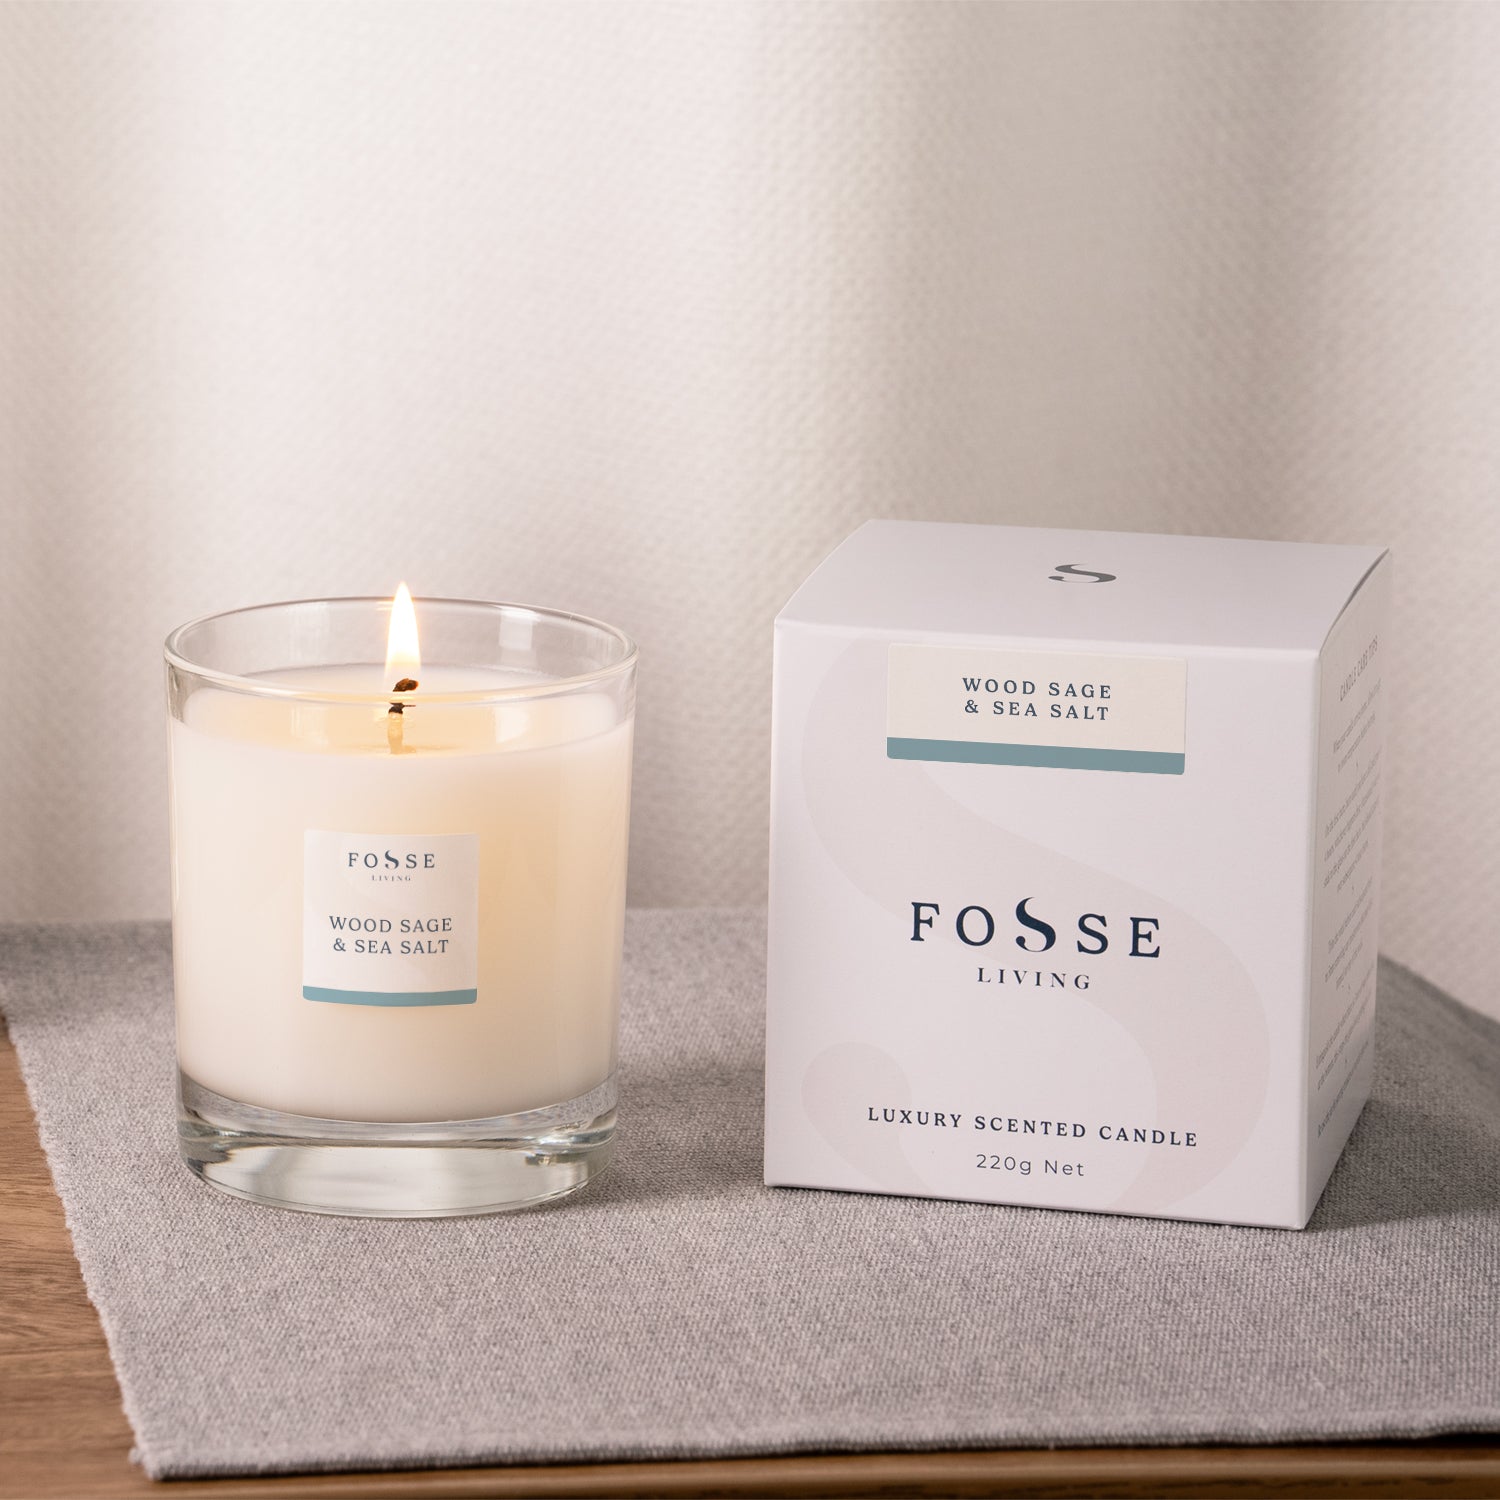 Wood Sage & Sea Salt Scented Candle - Fosse Living | Luxury Home Fragrances